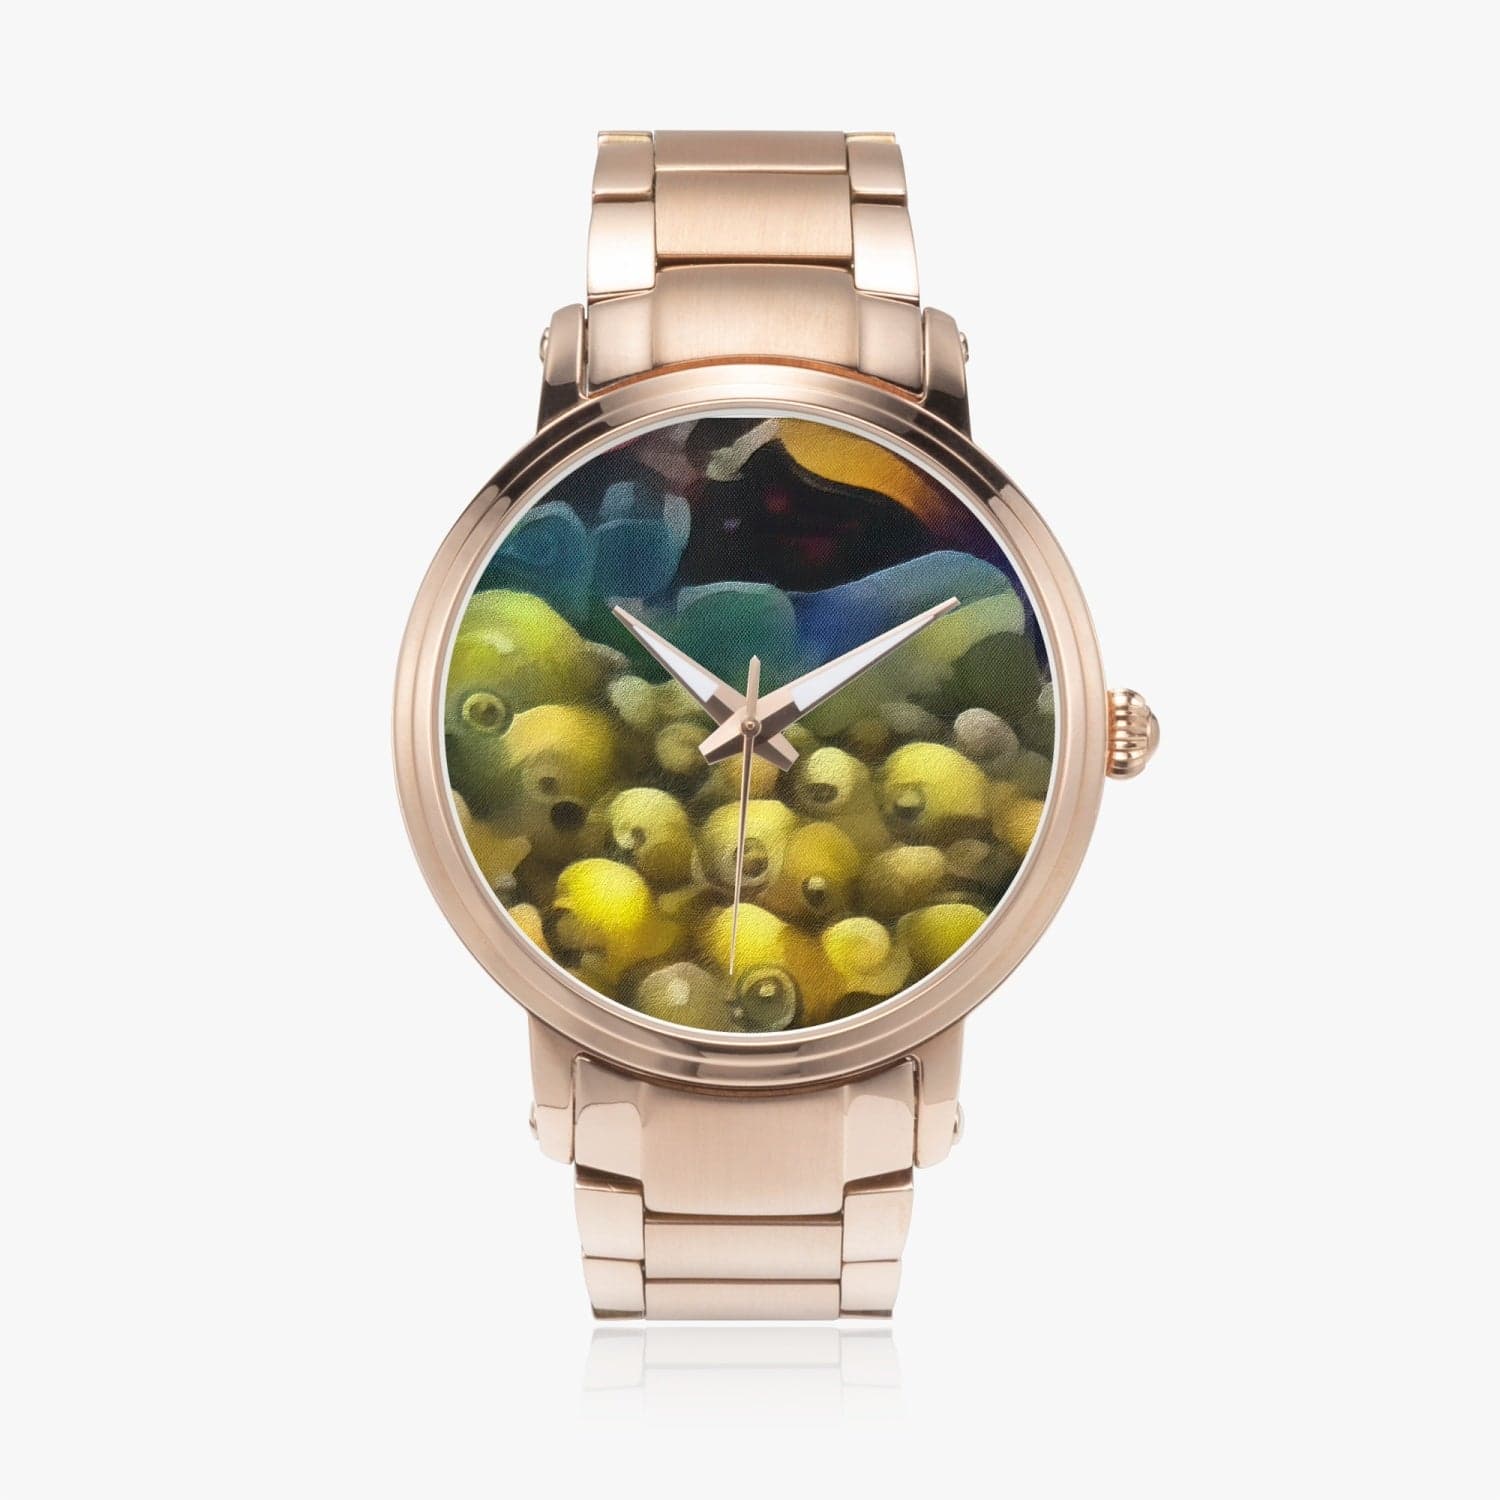 Got Lemons - Steel Strap Automatic Watch, by Sensus Studio Design